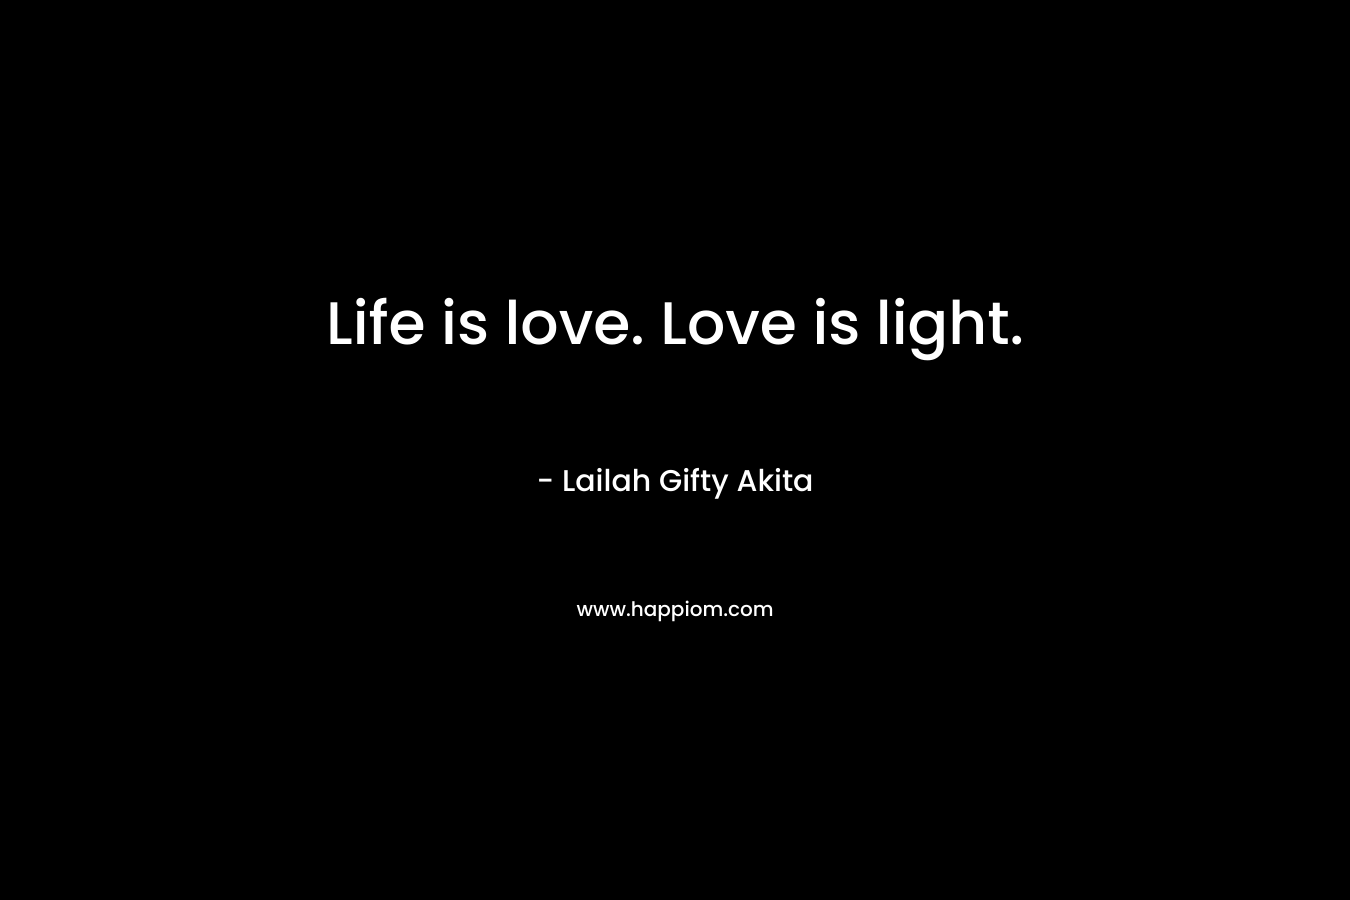 Life is love. Love is light.